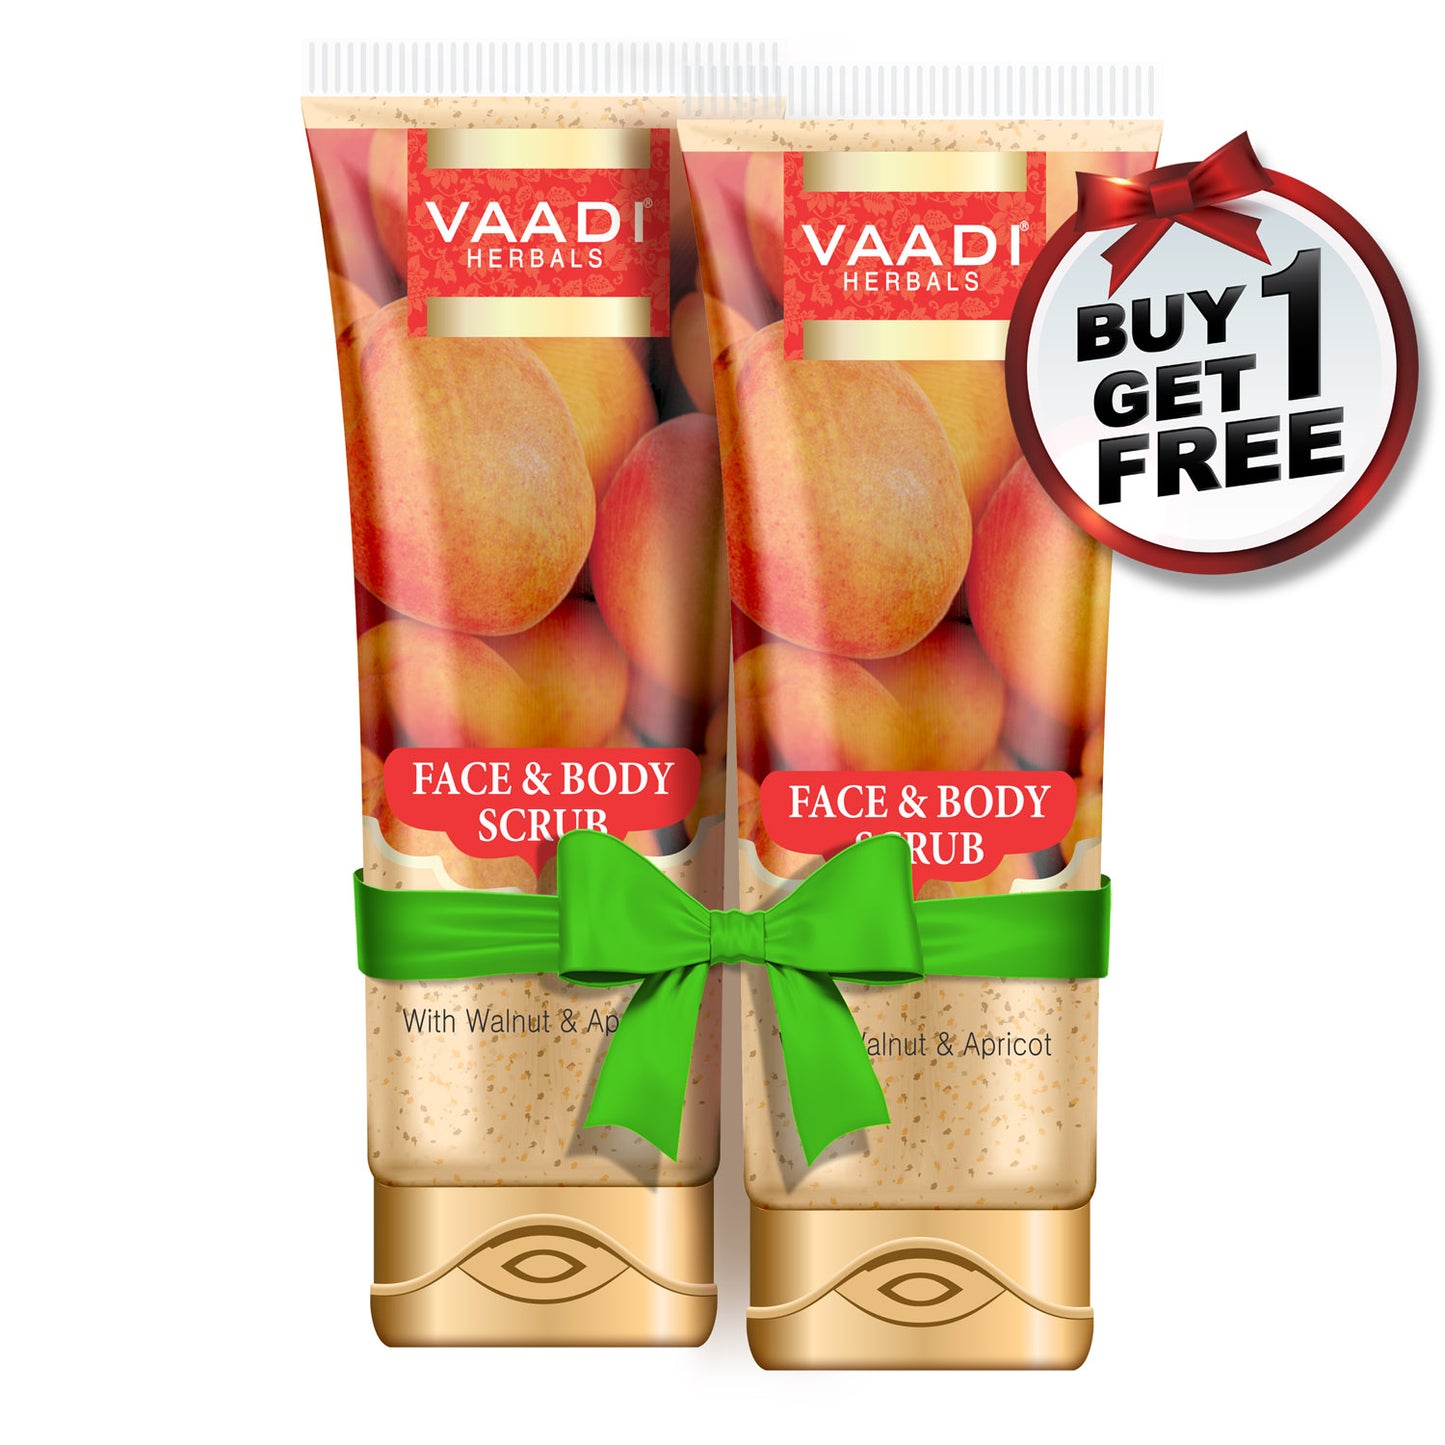 Organic Face & Body Scrub with Walnut & Apricot - Exfoliates & Unclogs Pores - Keeps Skin Youthful (110 gms / 4 oz) (Buy 1 Get 1 Free)